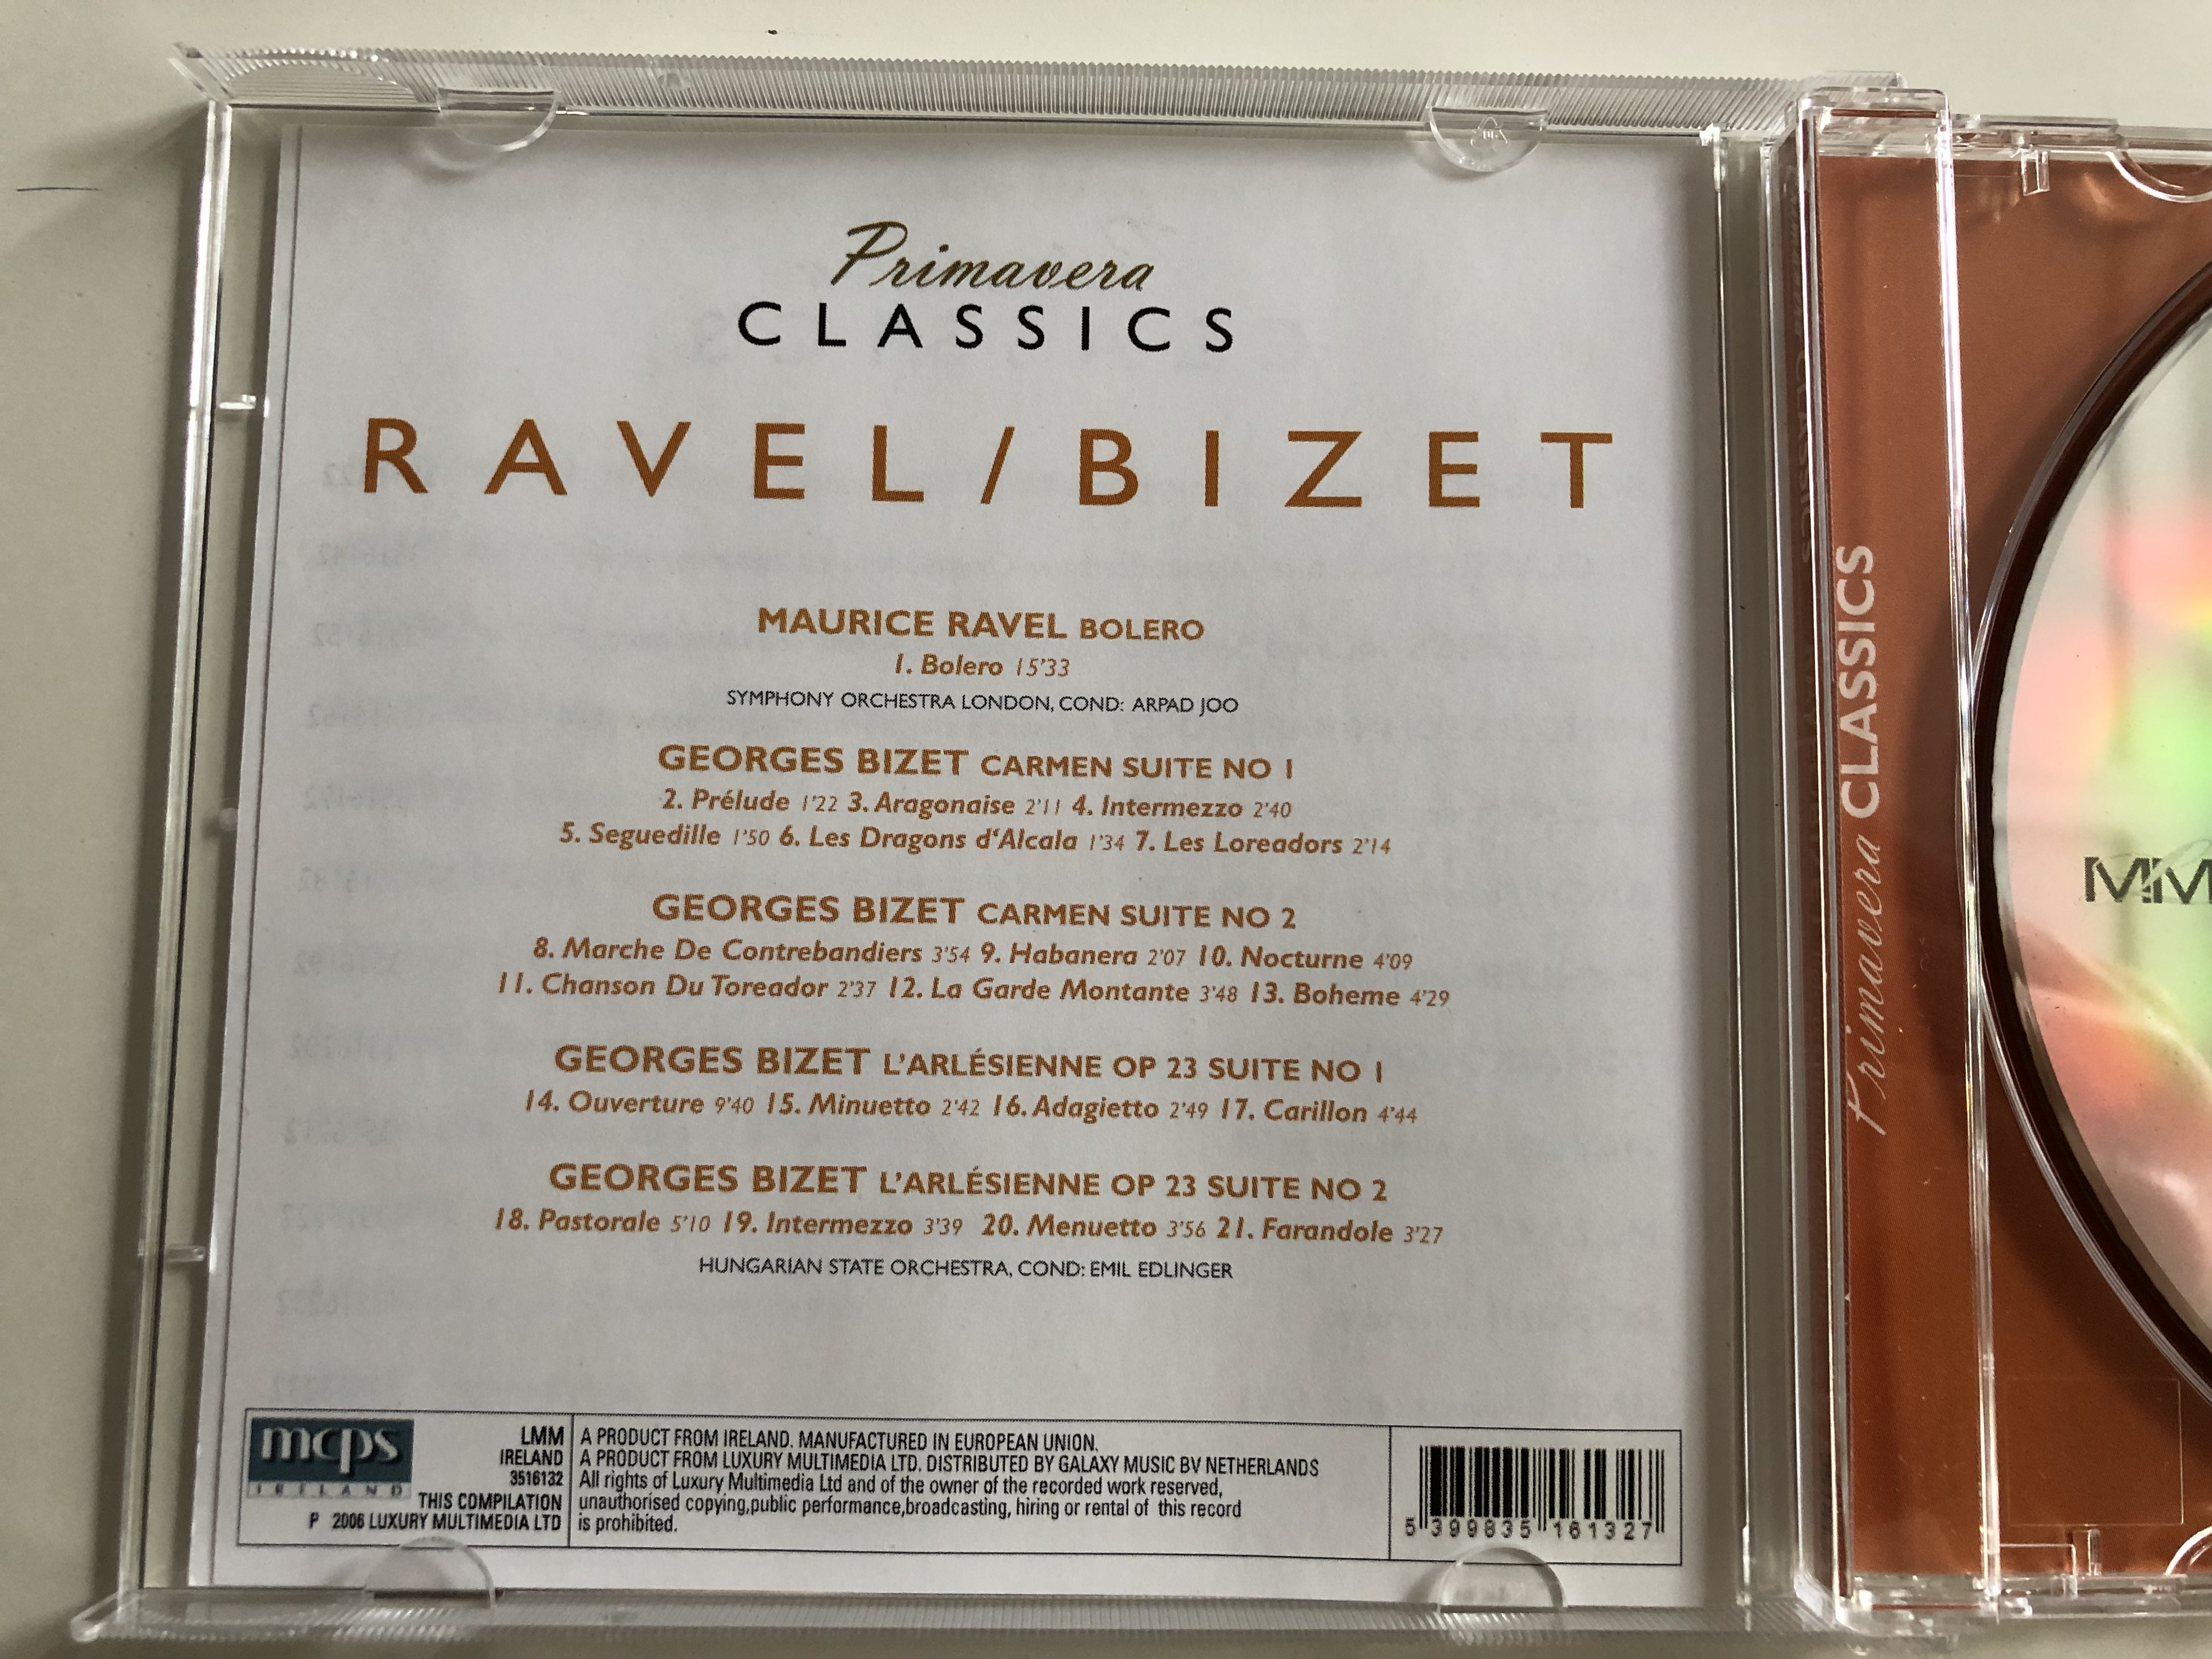 ravelbizet-bolero-carmen-l-arlesienne-suites-hungarian-state-orchestra-conducted-emil-edlinger-primavera-classics-audio-cd-3516132-2-.jpg